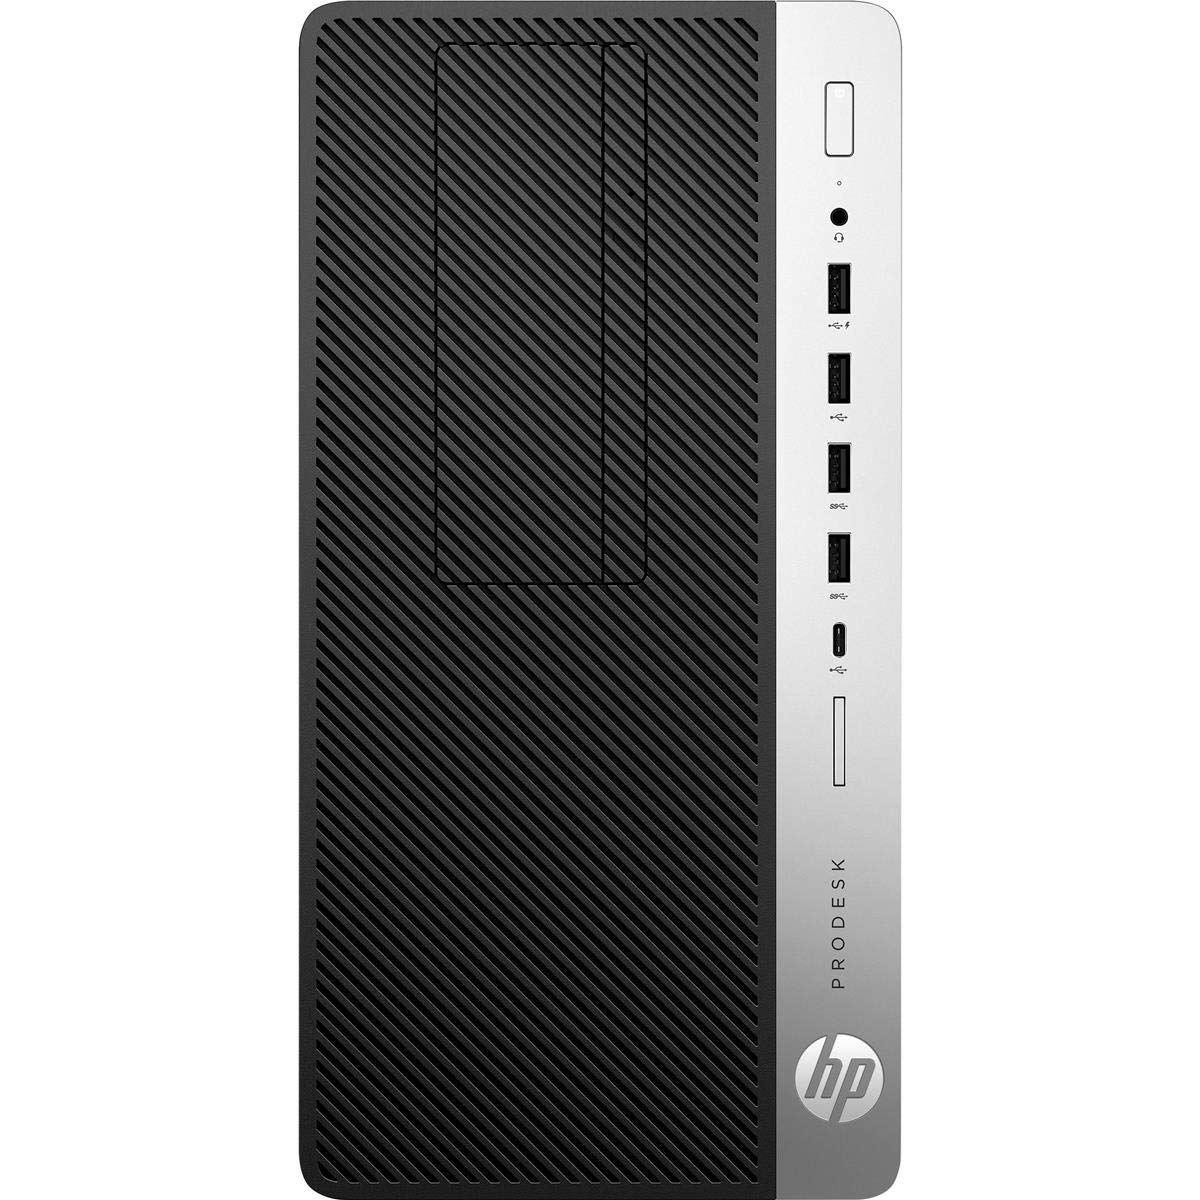 HP Business Desktop ProDesk 600 G3 Desktop Computer - Intel Core i5 (7th Gen) i5-7500 3.40 GHz - 8 GB DDR4 SDRAM - 1 TB HDD - Windows 10 Pro(Renewed)